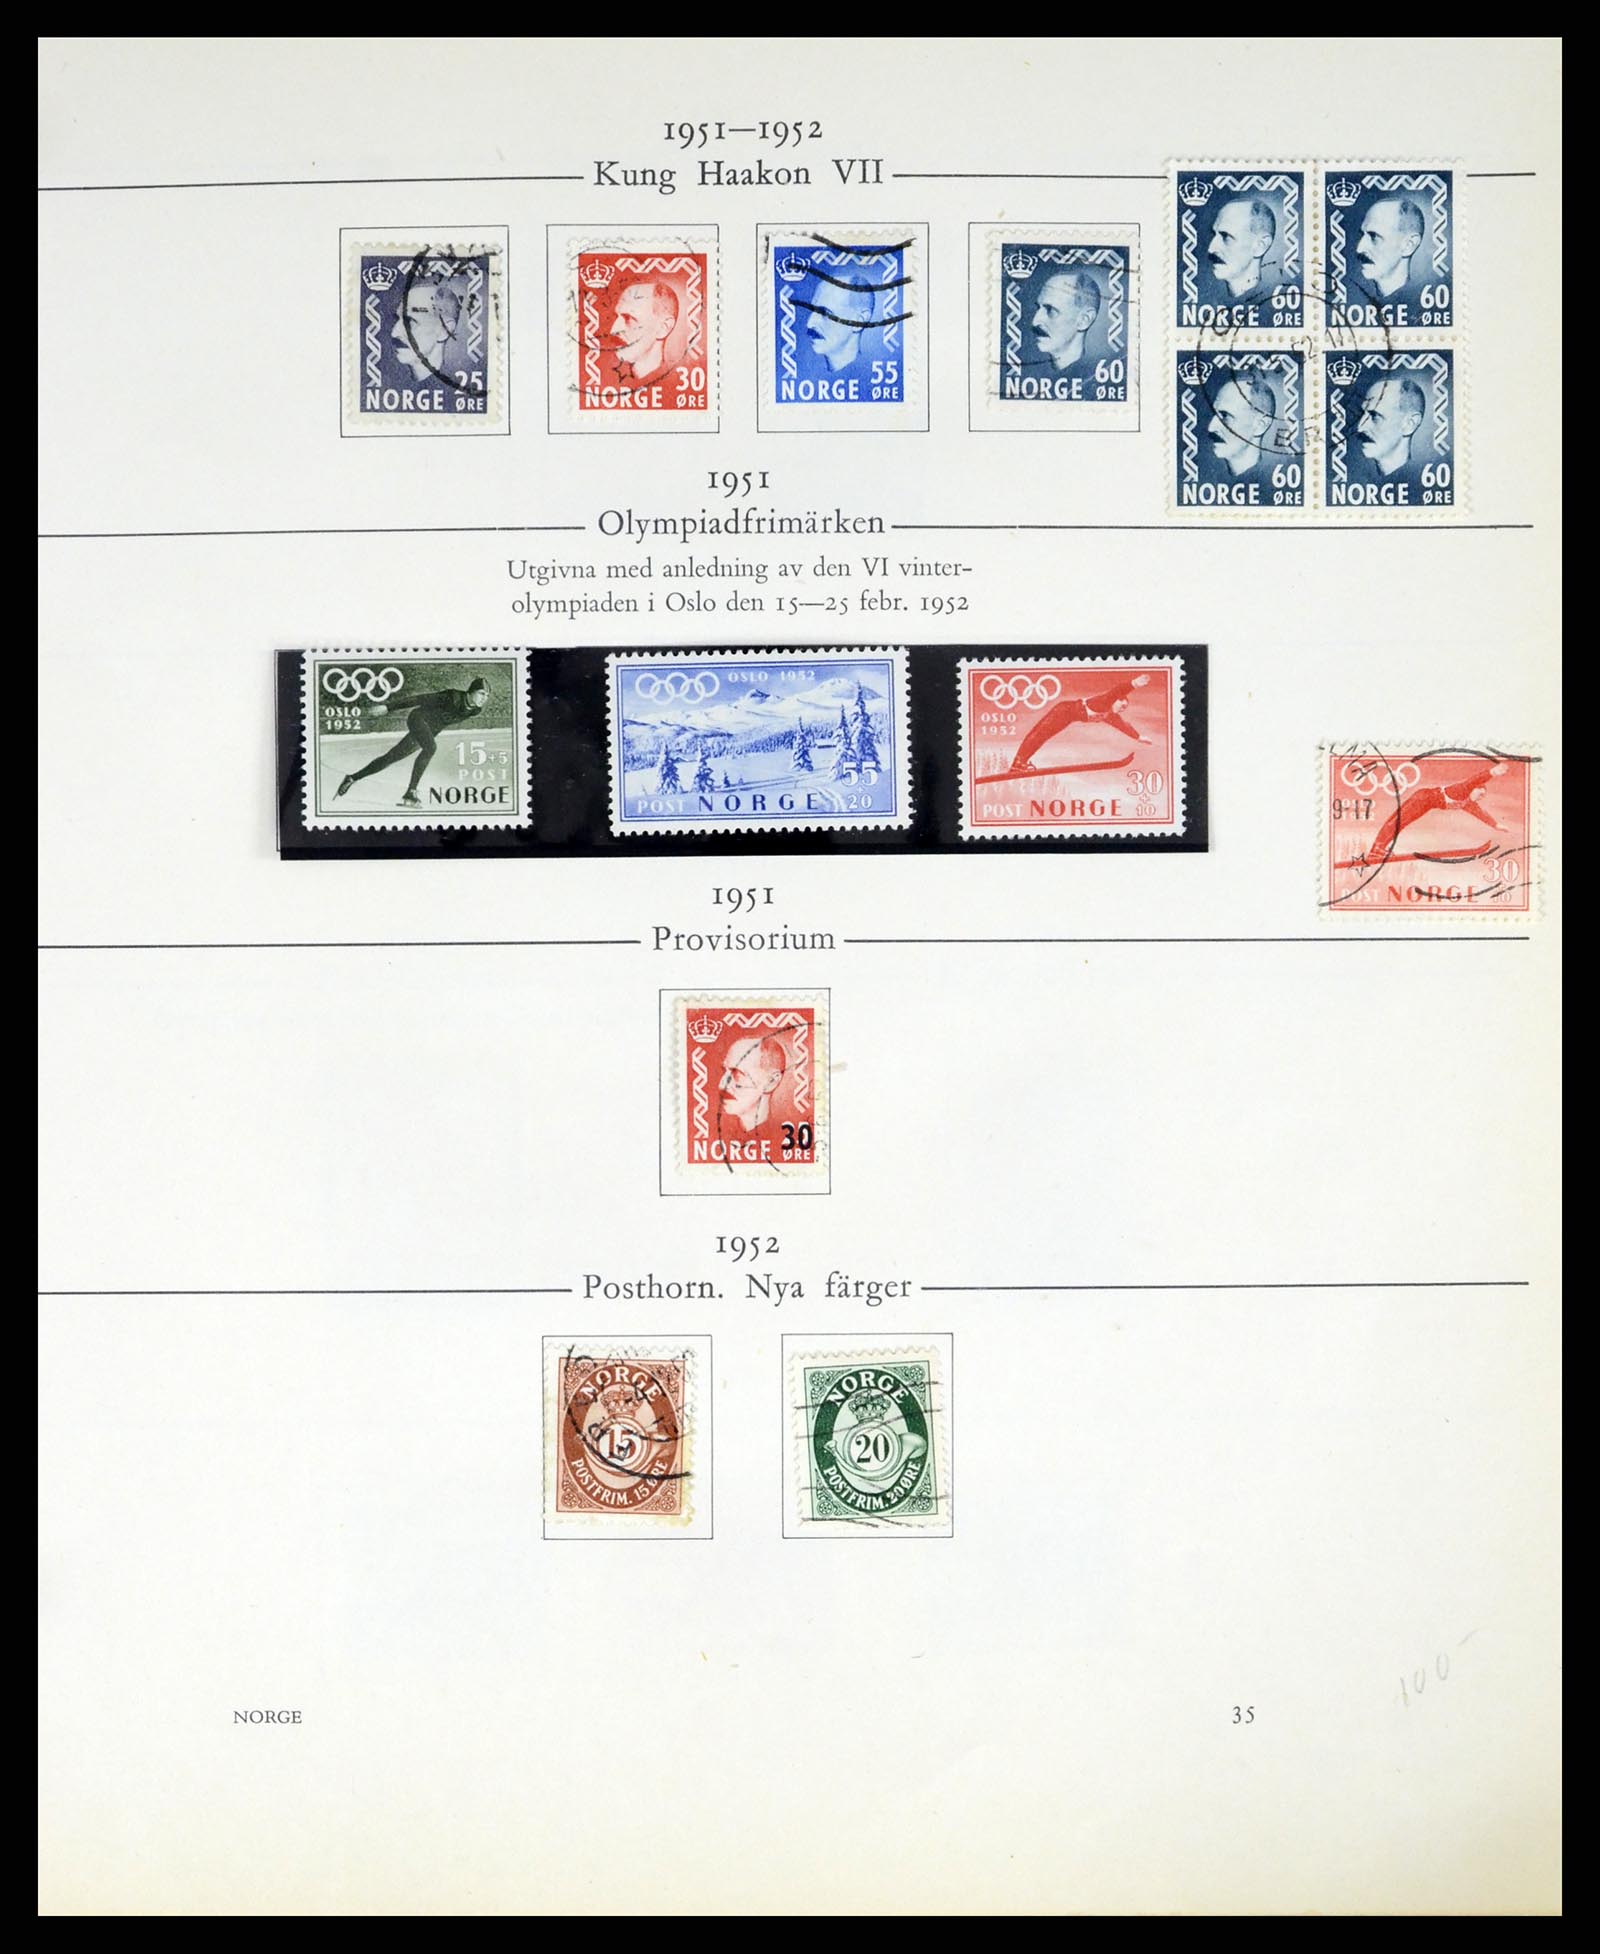 37387 036 - Stamp collection 37387 Scandinavia 1851-1960.